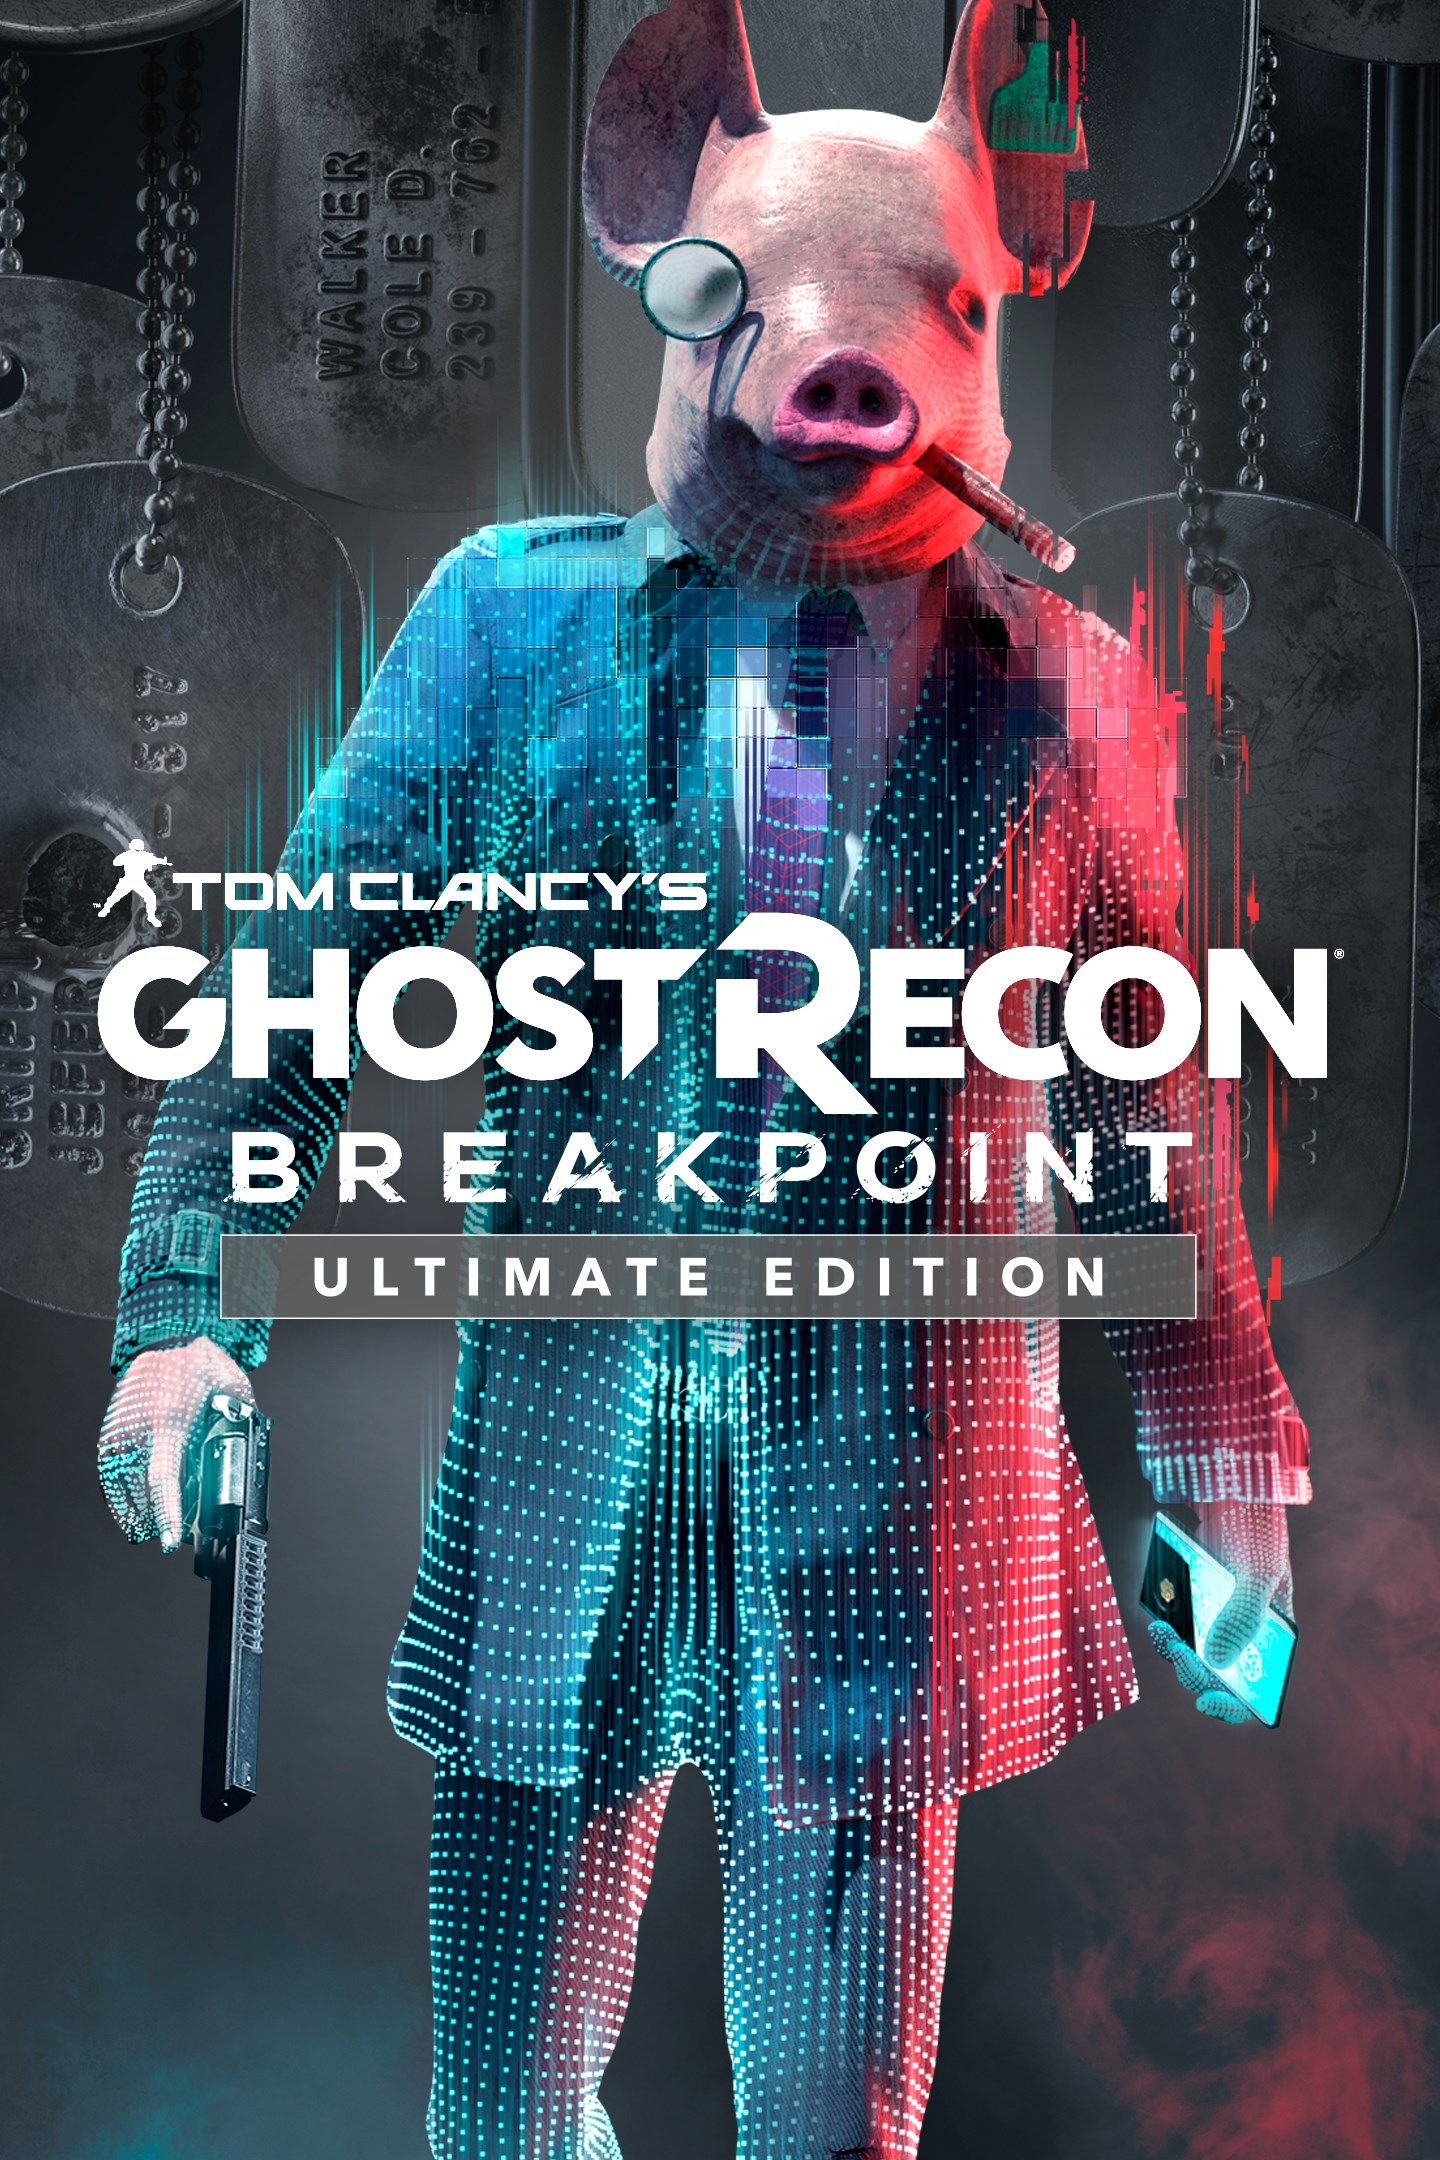 Измененная обложка Ghost Recon Breakpoint Ultimate Edition.
Источник: Microsoft Store